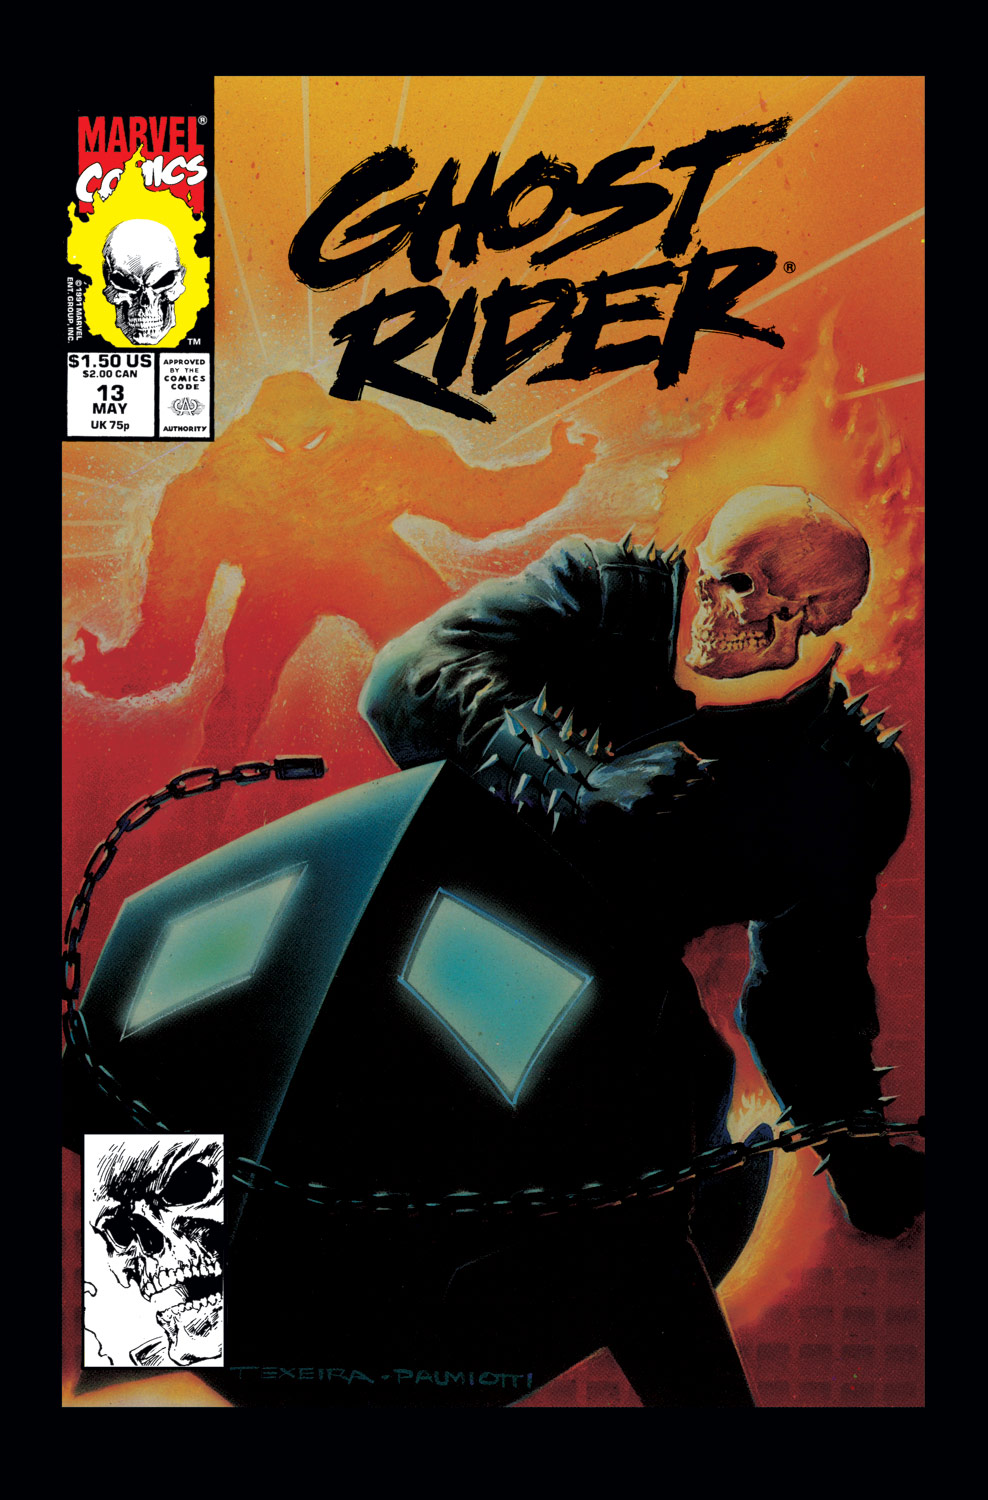 Ghost Rider (1990) #13